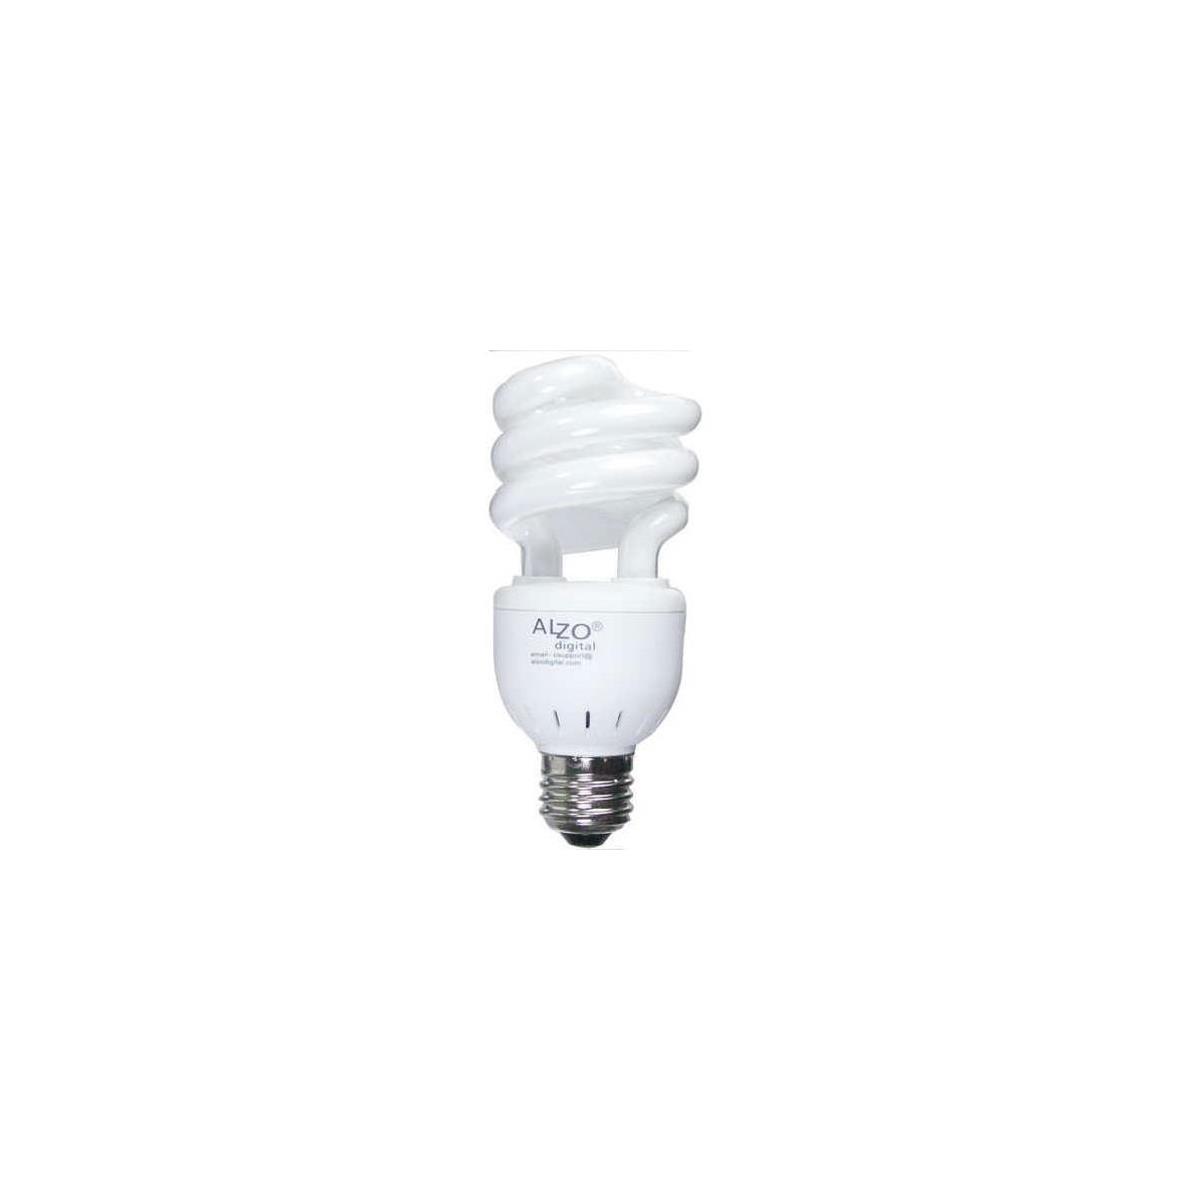 Image of Alzo Digital 15W 120V CFL Video-Lux Photo Light Bulb